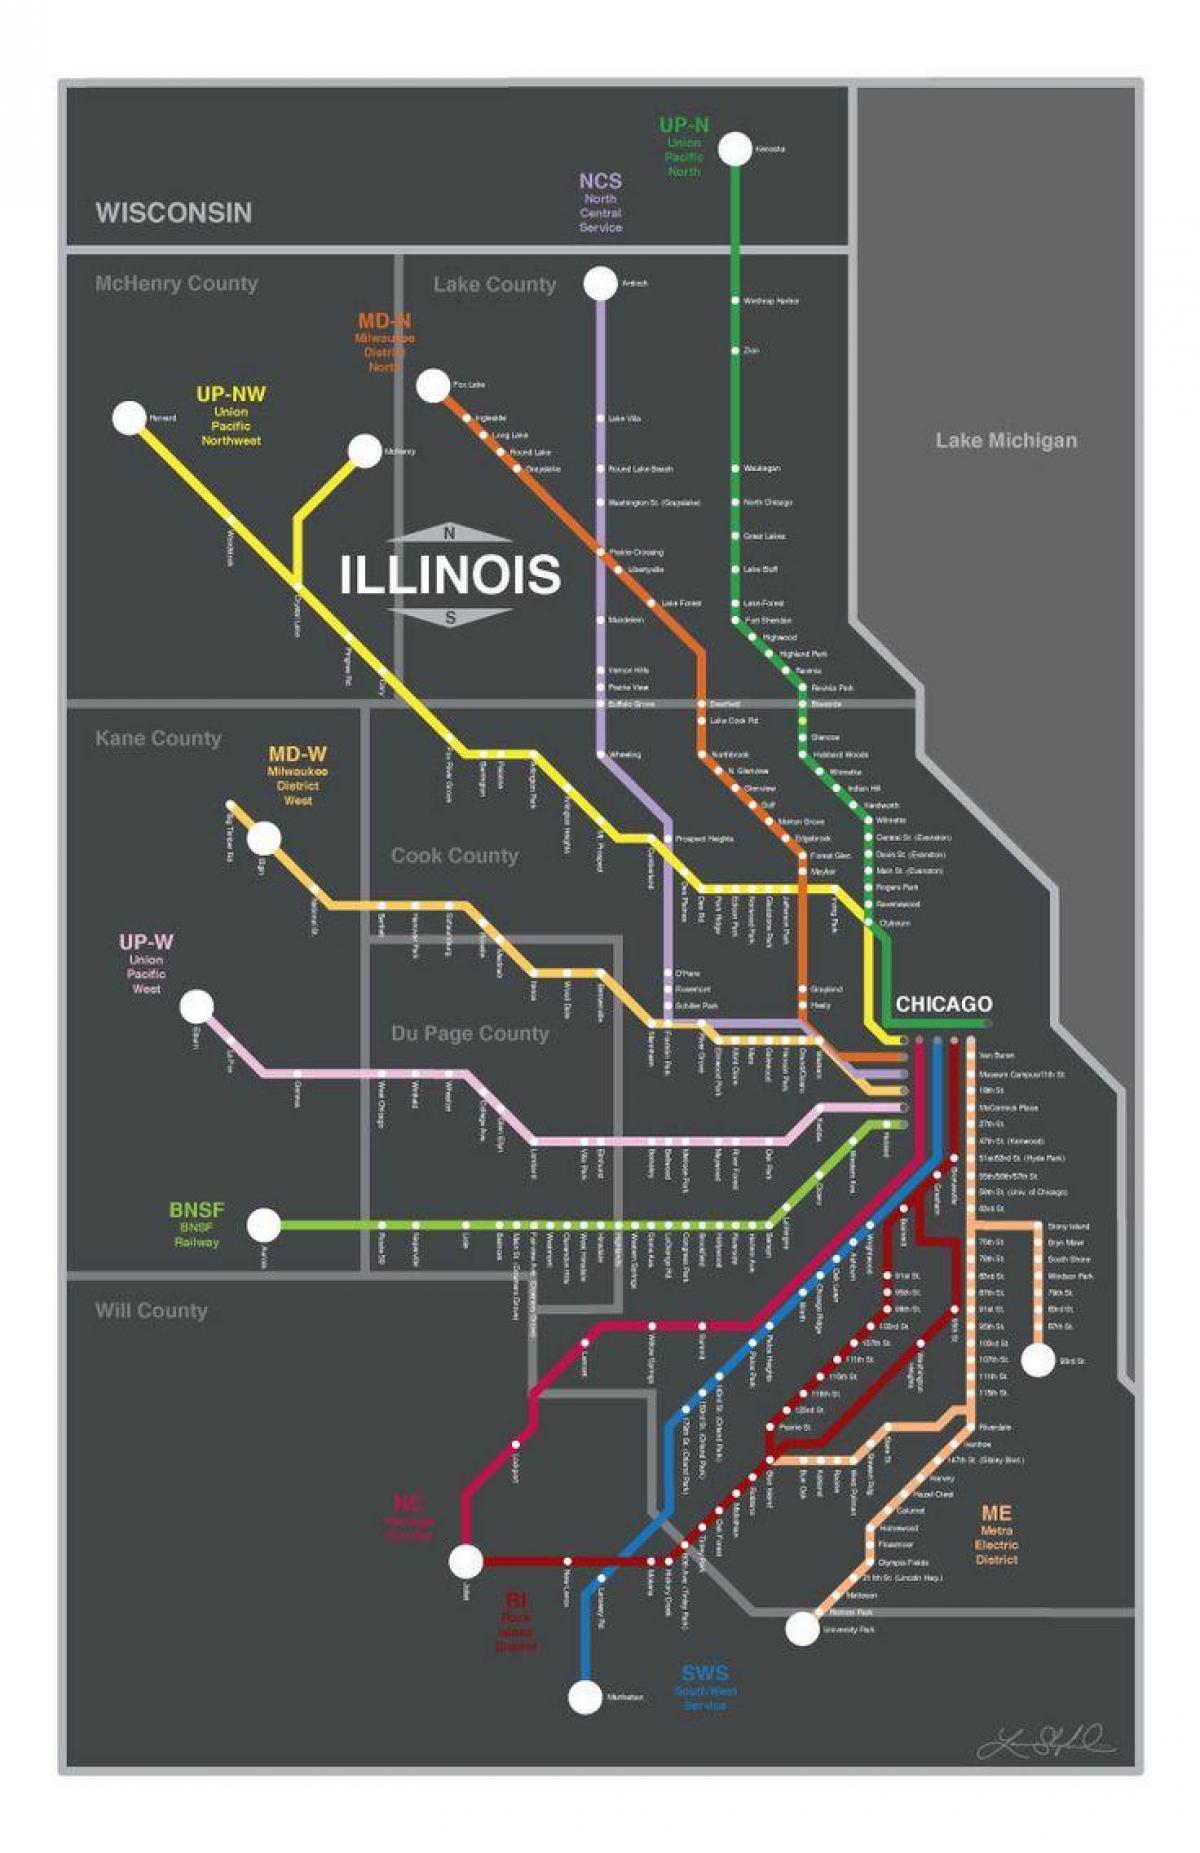 metra train map Chicago